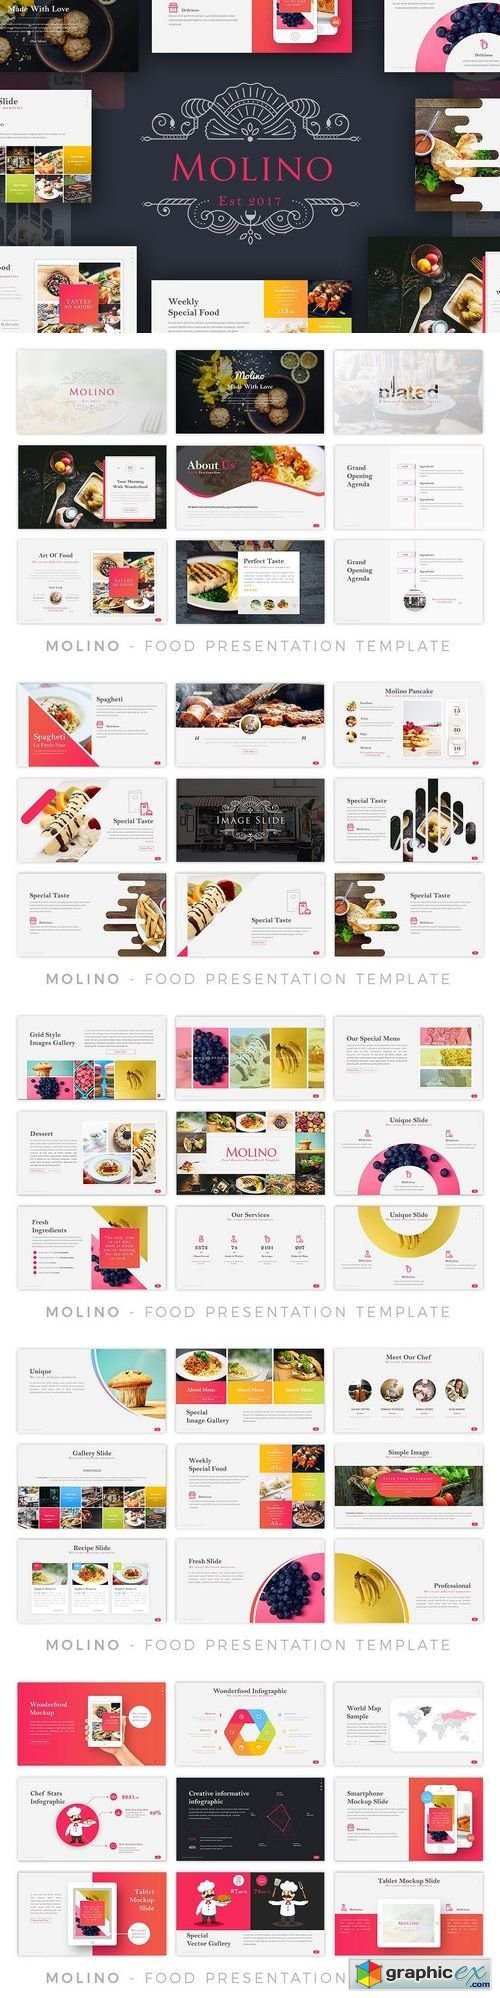 Molino - Food Presentation